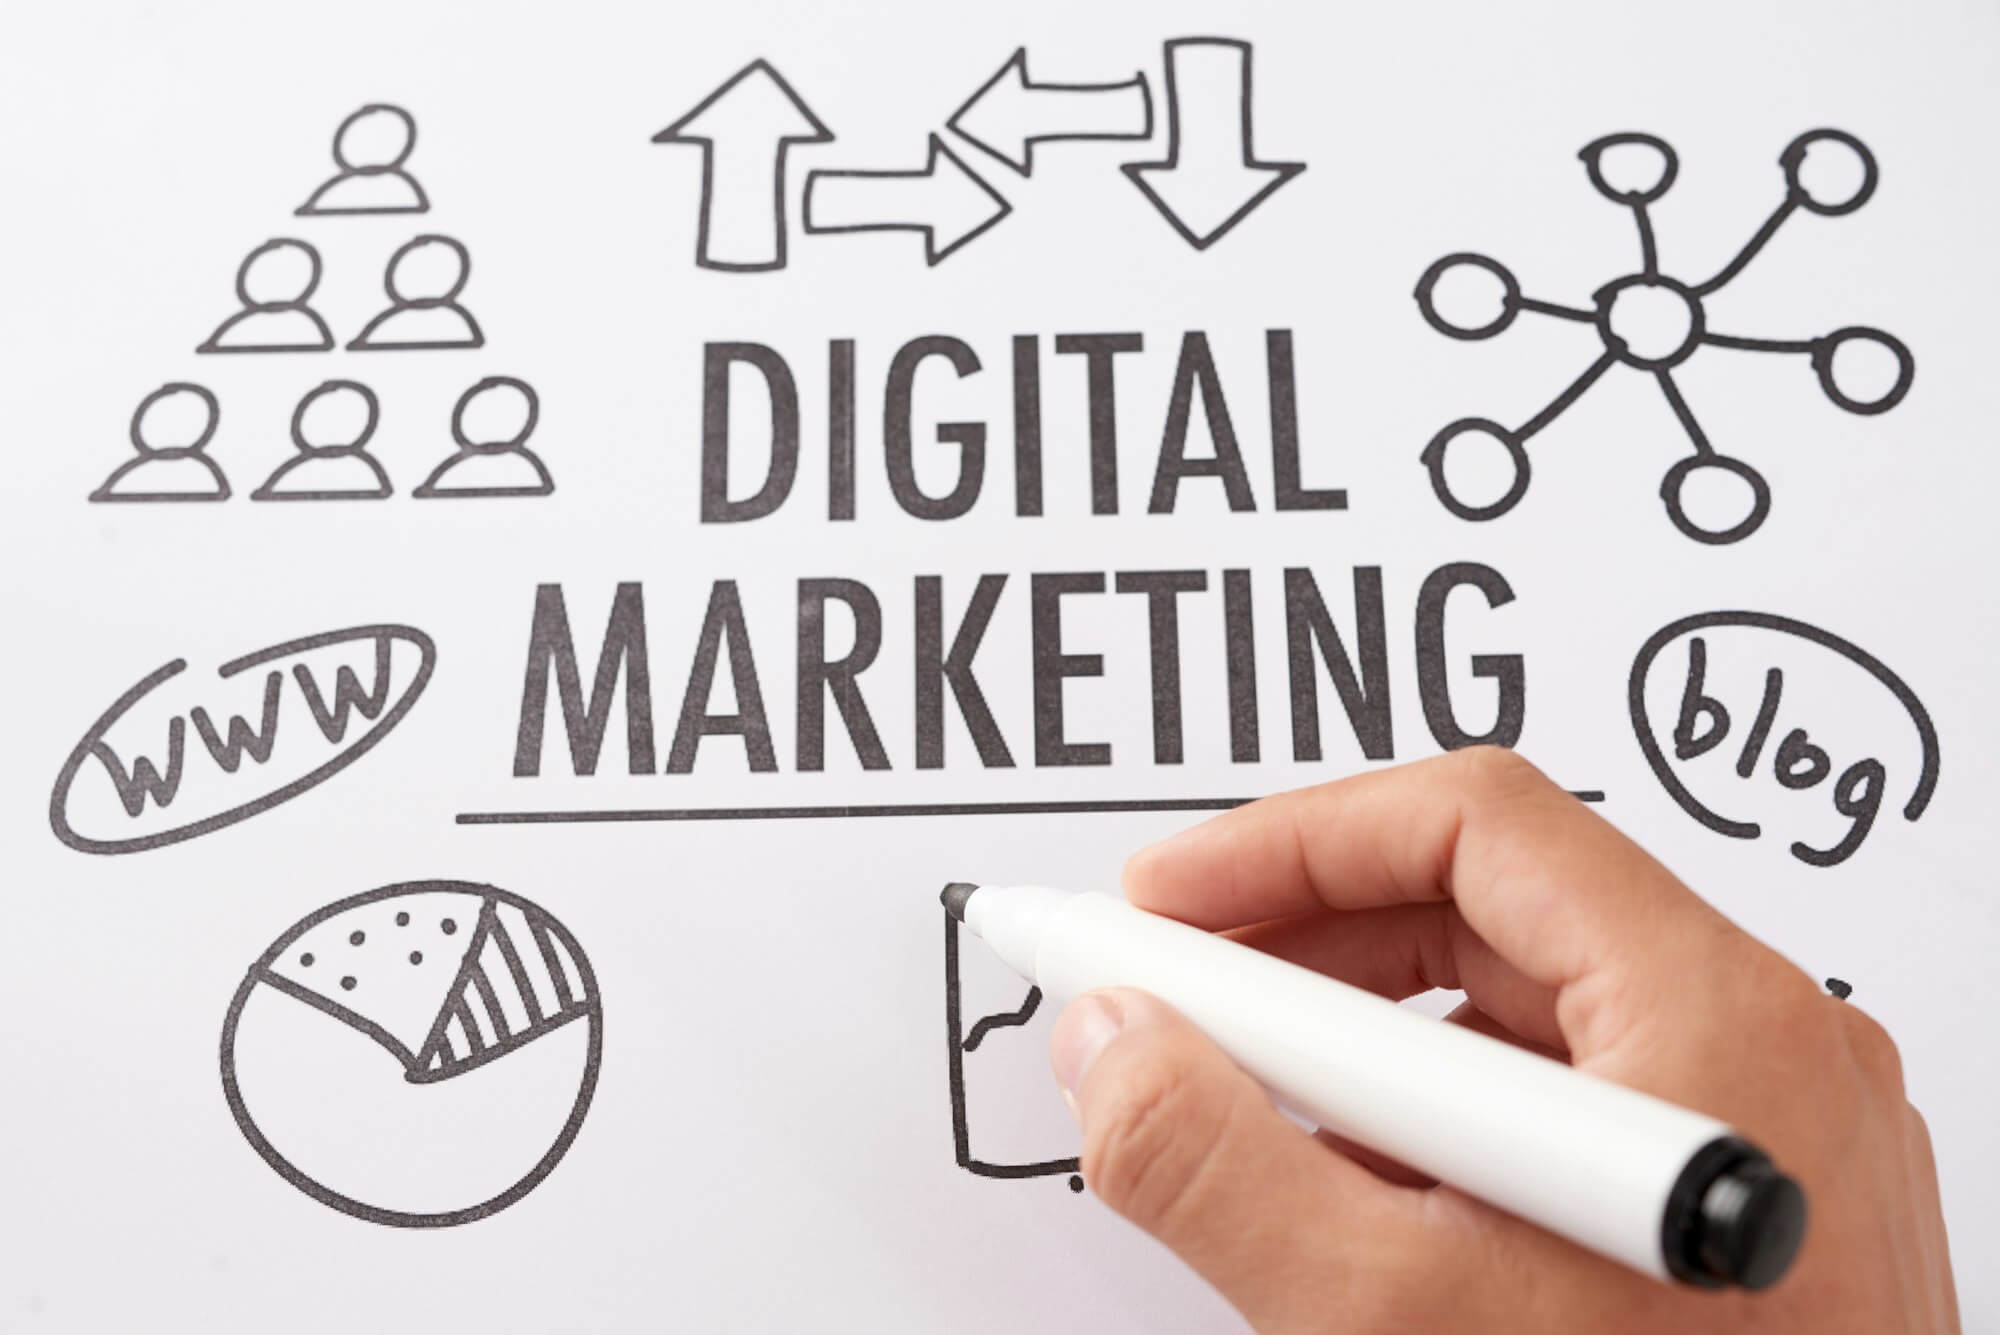 crop hand drawing digital marketing plan - Blueprint for Online Growth: Innovative Digital Marketing Strategies for Contractors